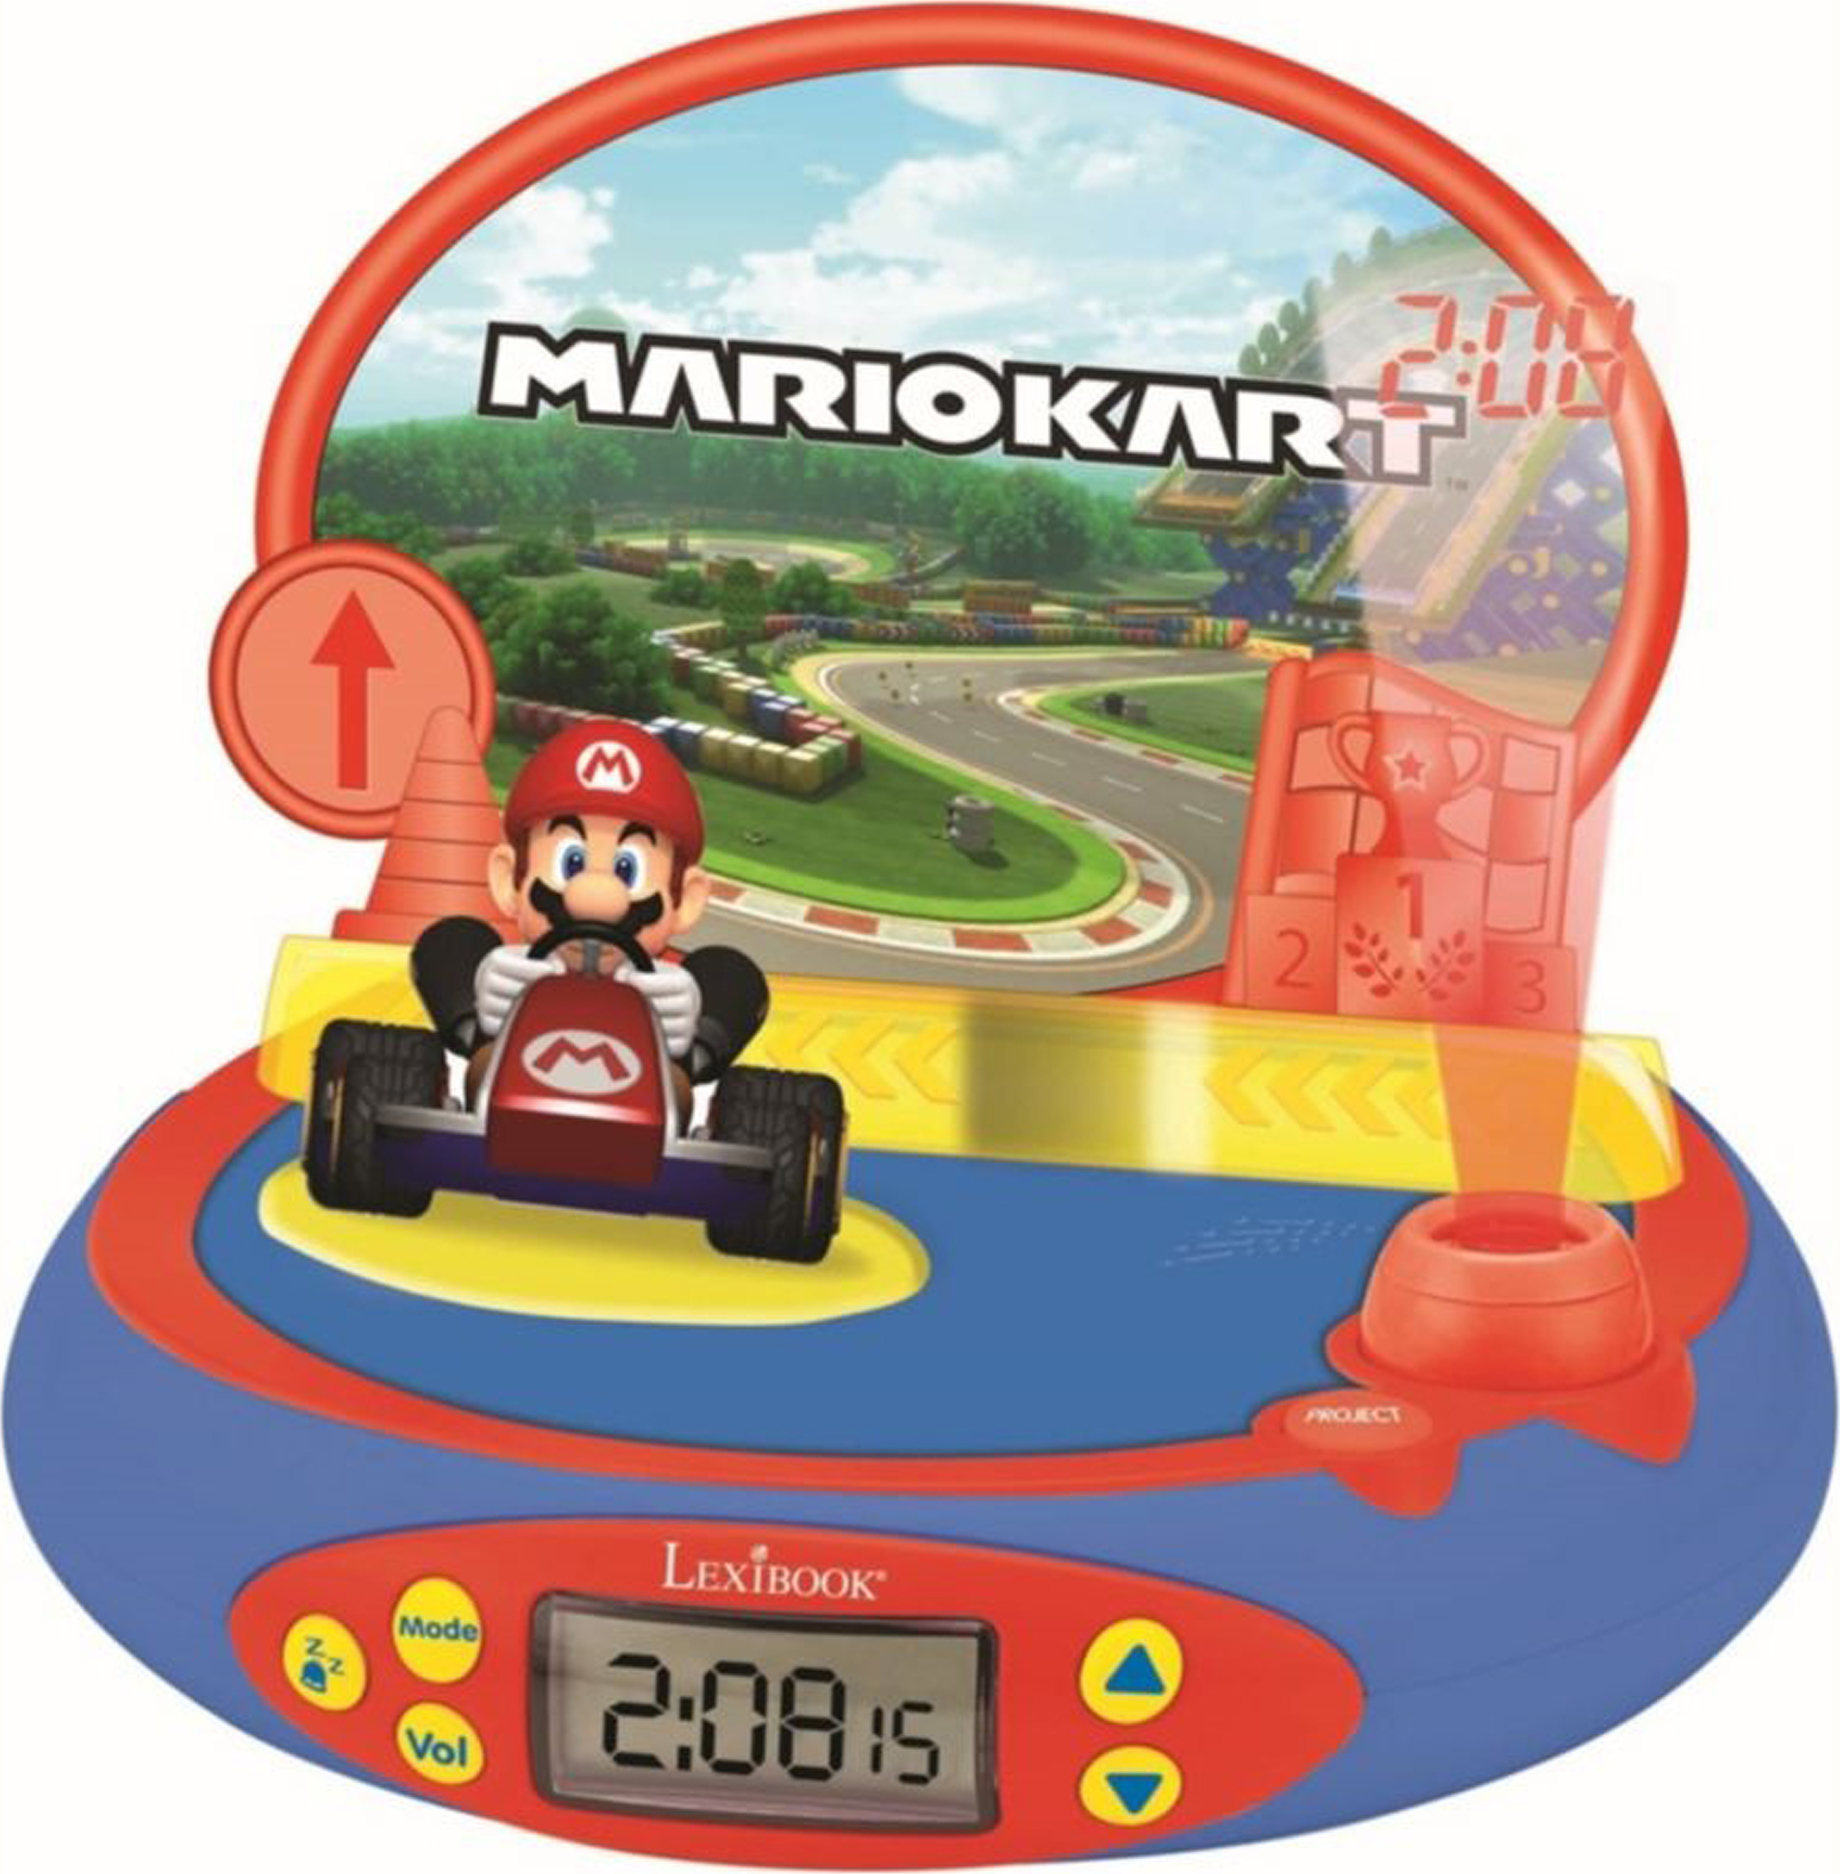 Dětský budík Mario Kart s projektorem